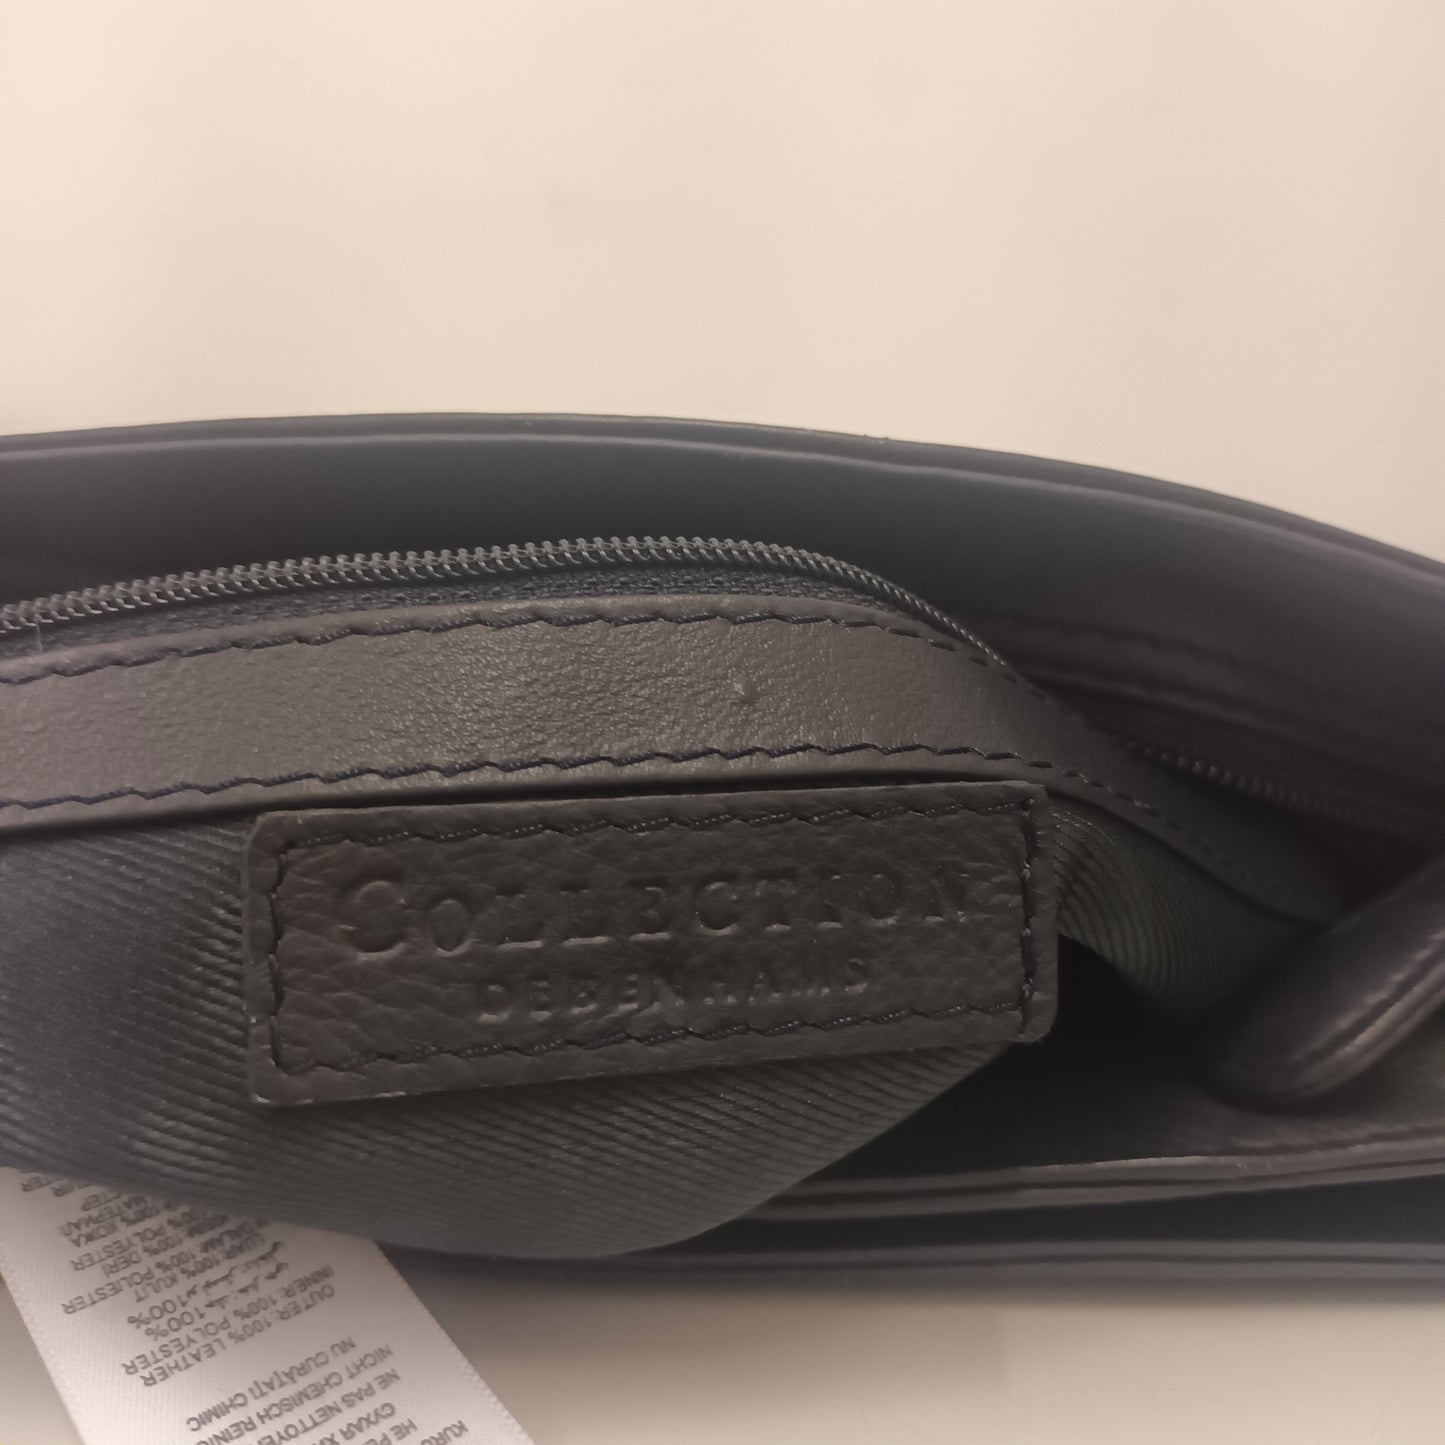 Debenhams Collection Dark Navy Leather Handbag